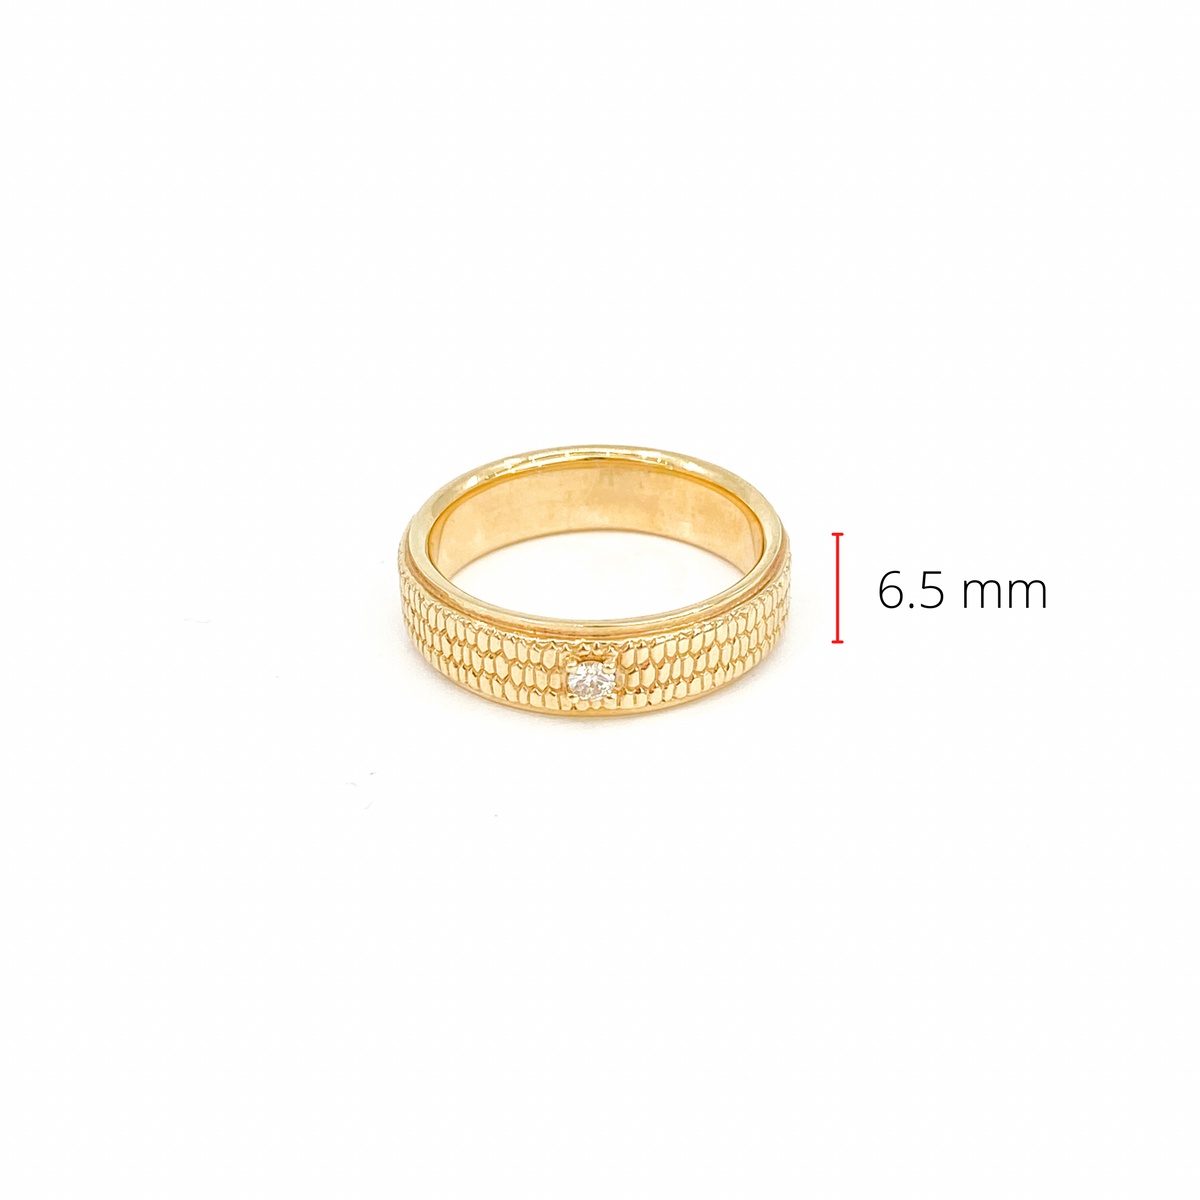 14K Yellow Gold 0.07cttw Canadian Diamond Gents Diamond Ring, size 10